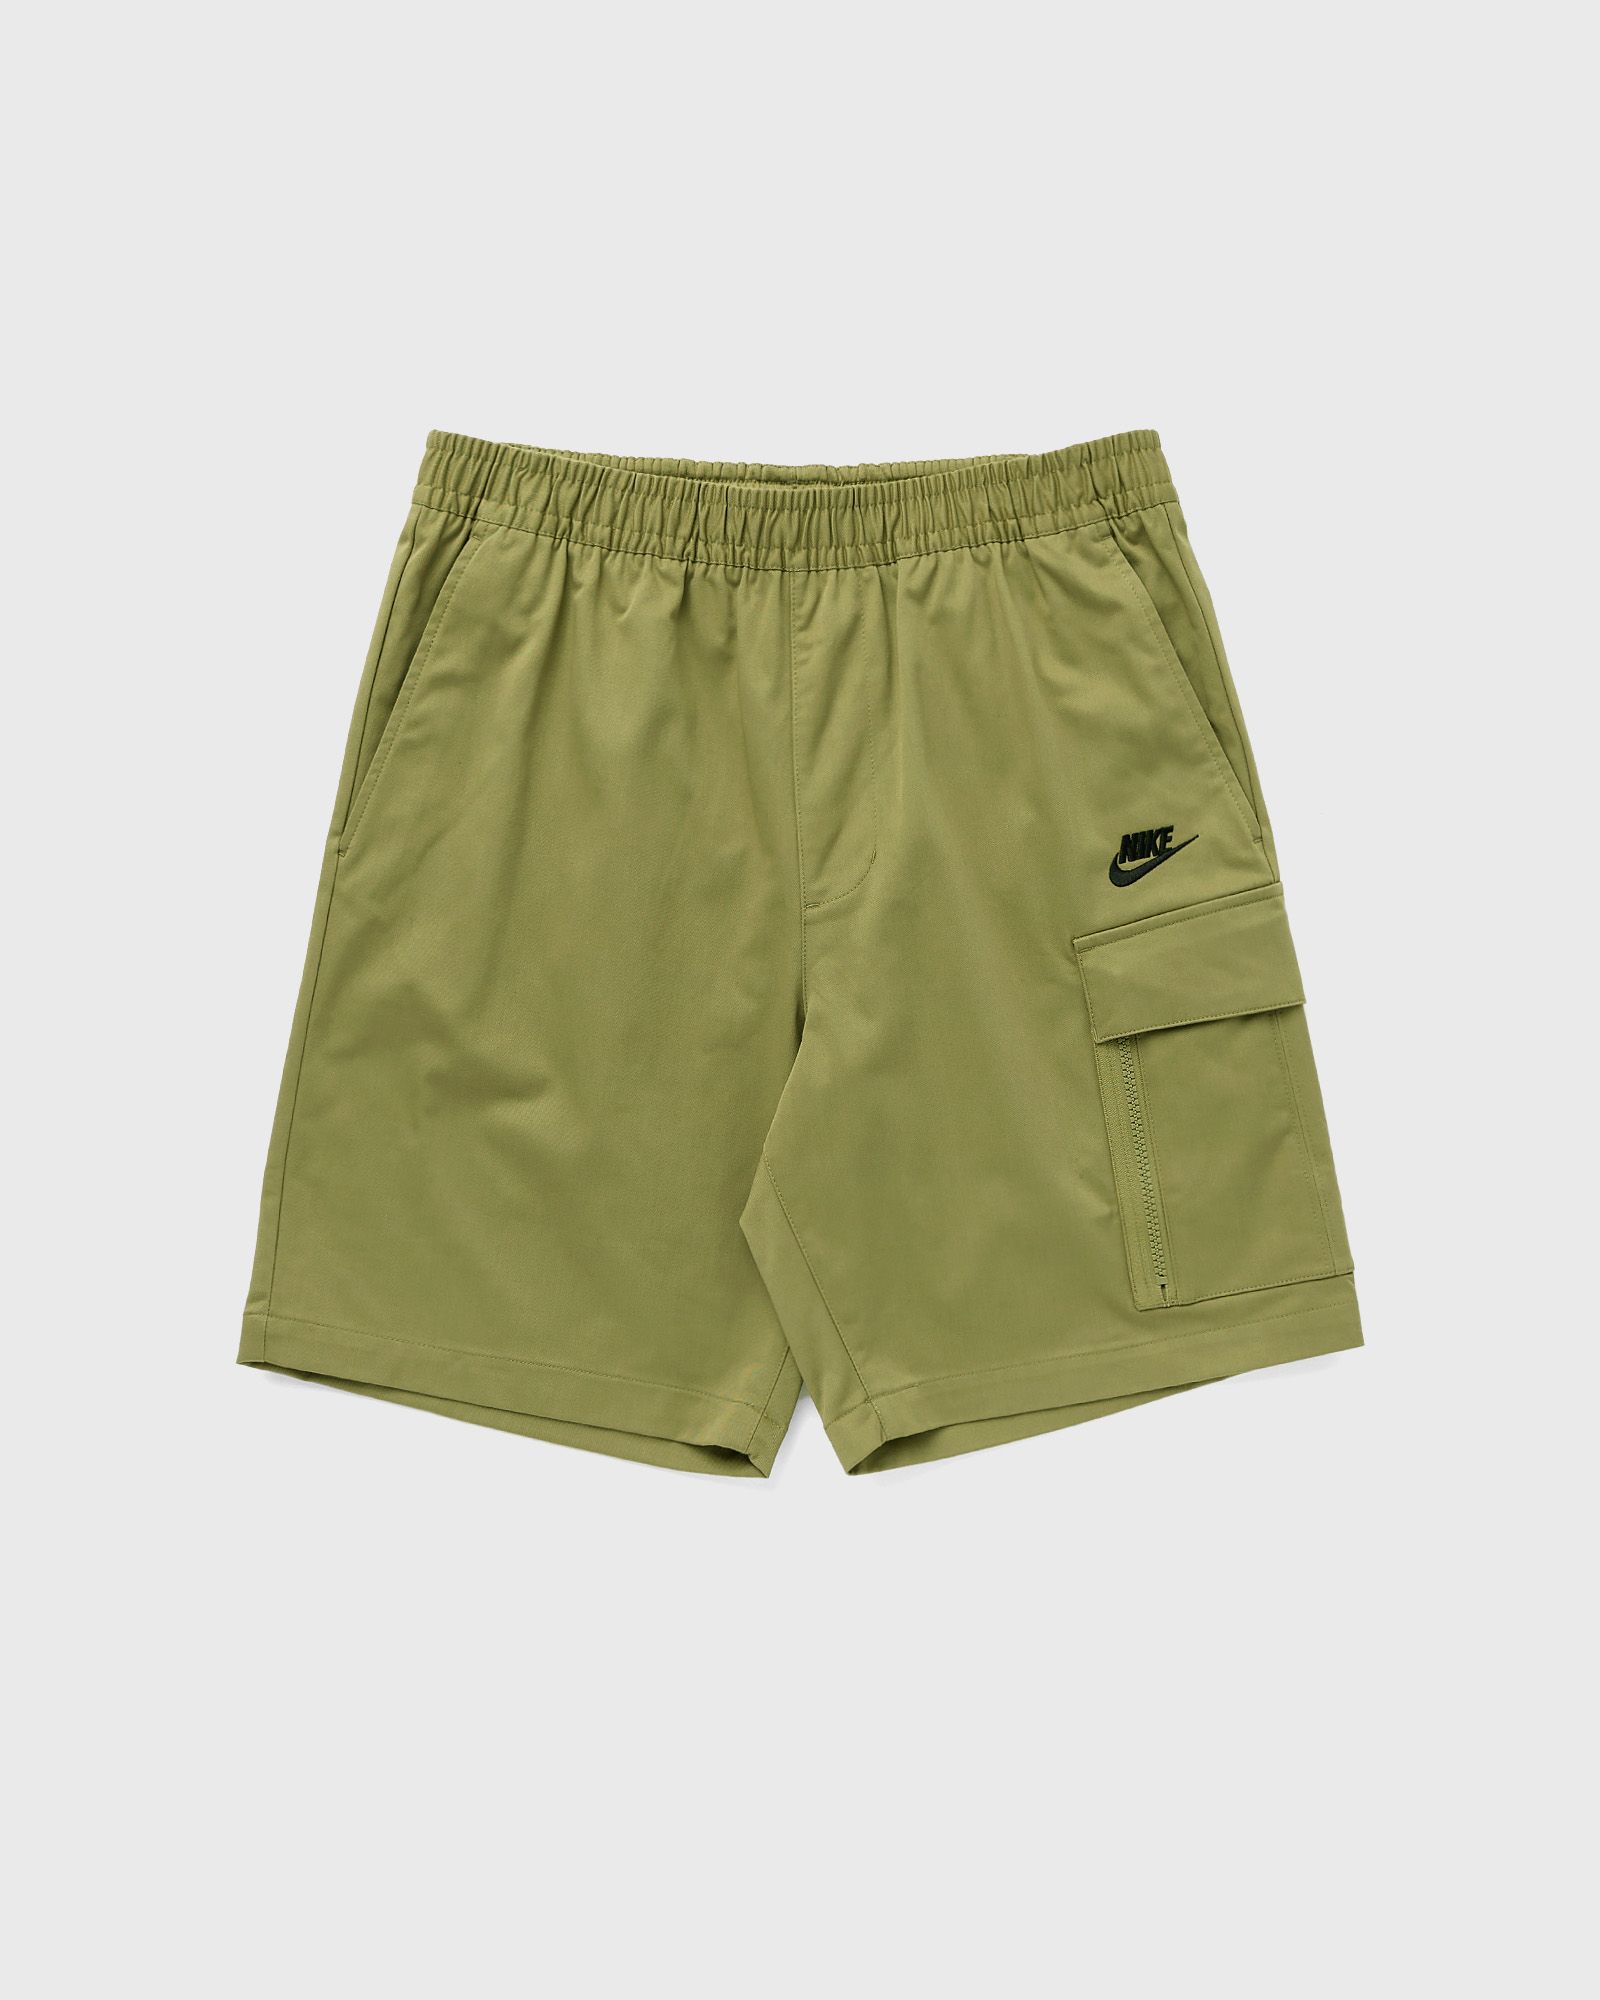 Nike - woven short men cargo shorts green in größe:xl